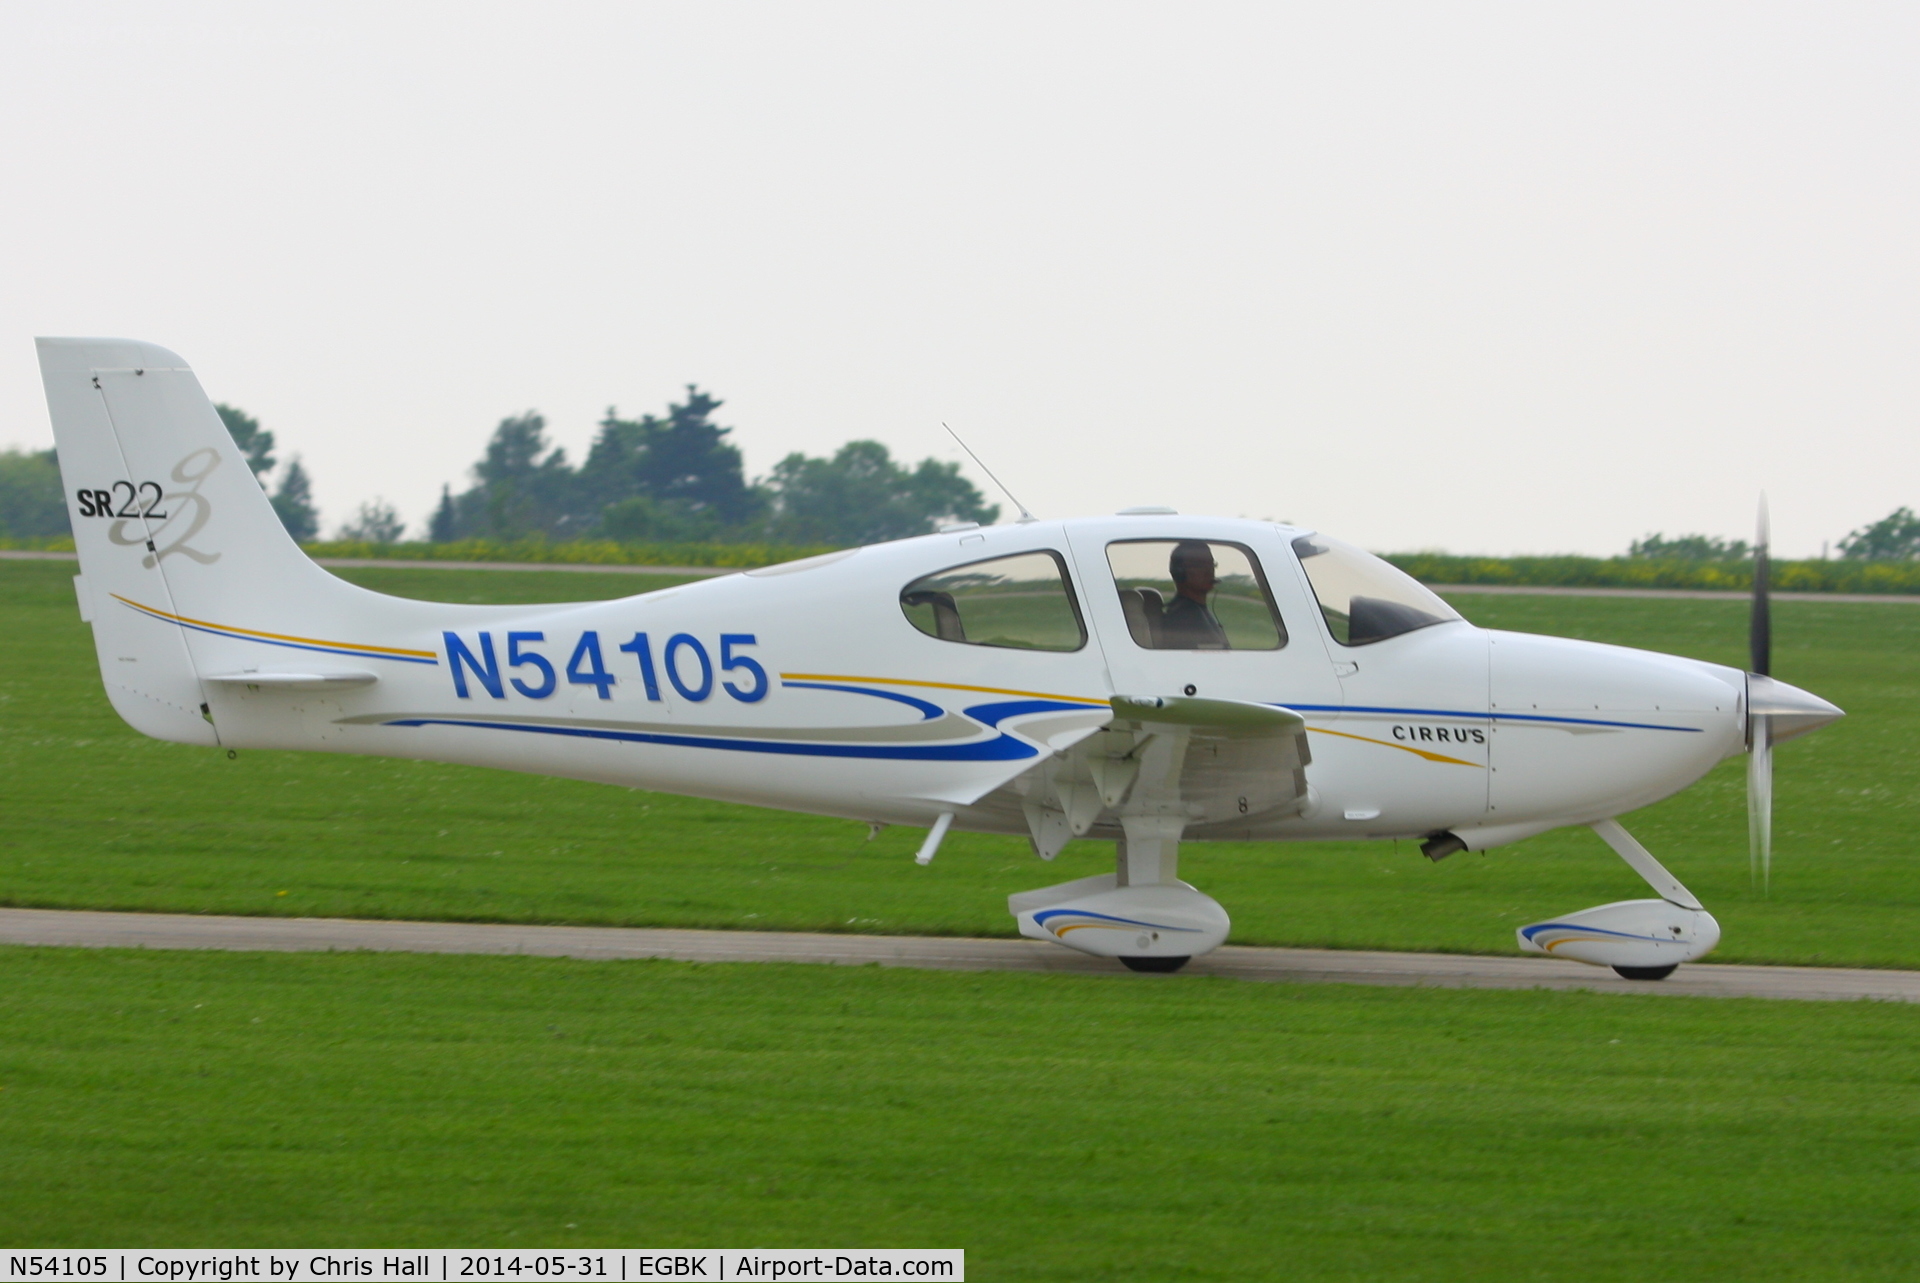 N54105, 2004 Cirrus SR22 G2 C/N 1139, at AeroExpo 2014